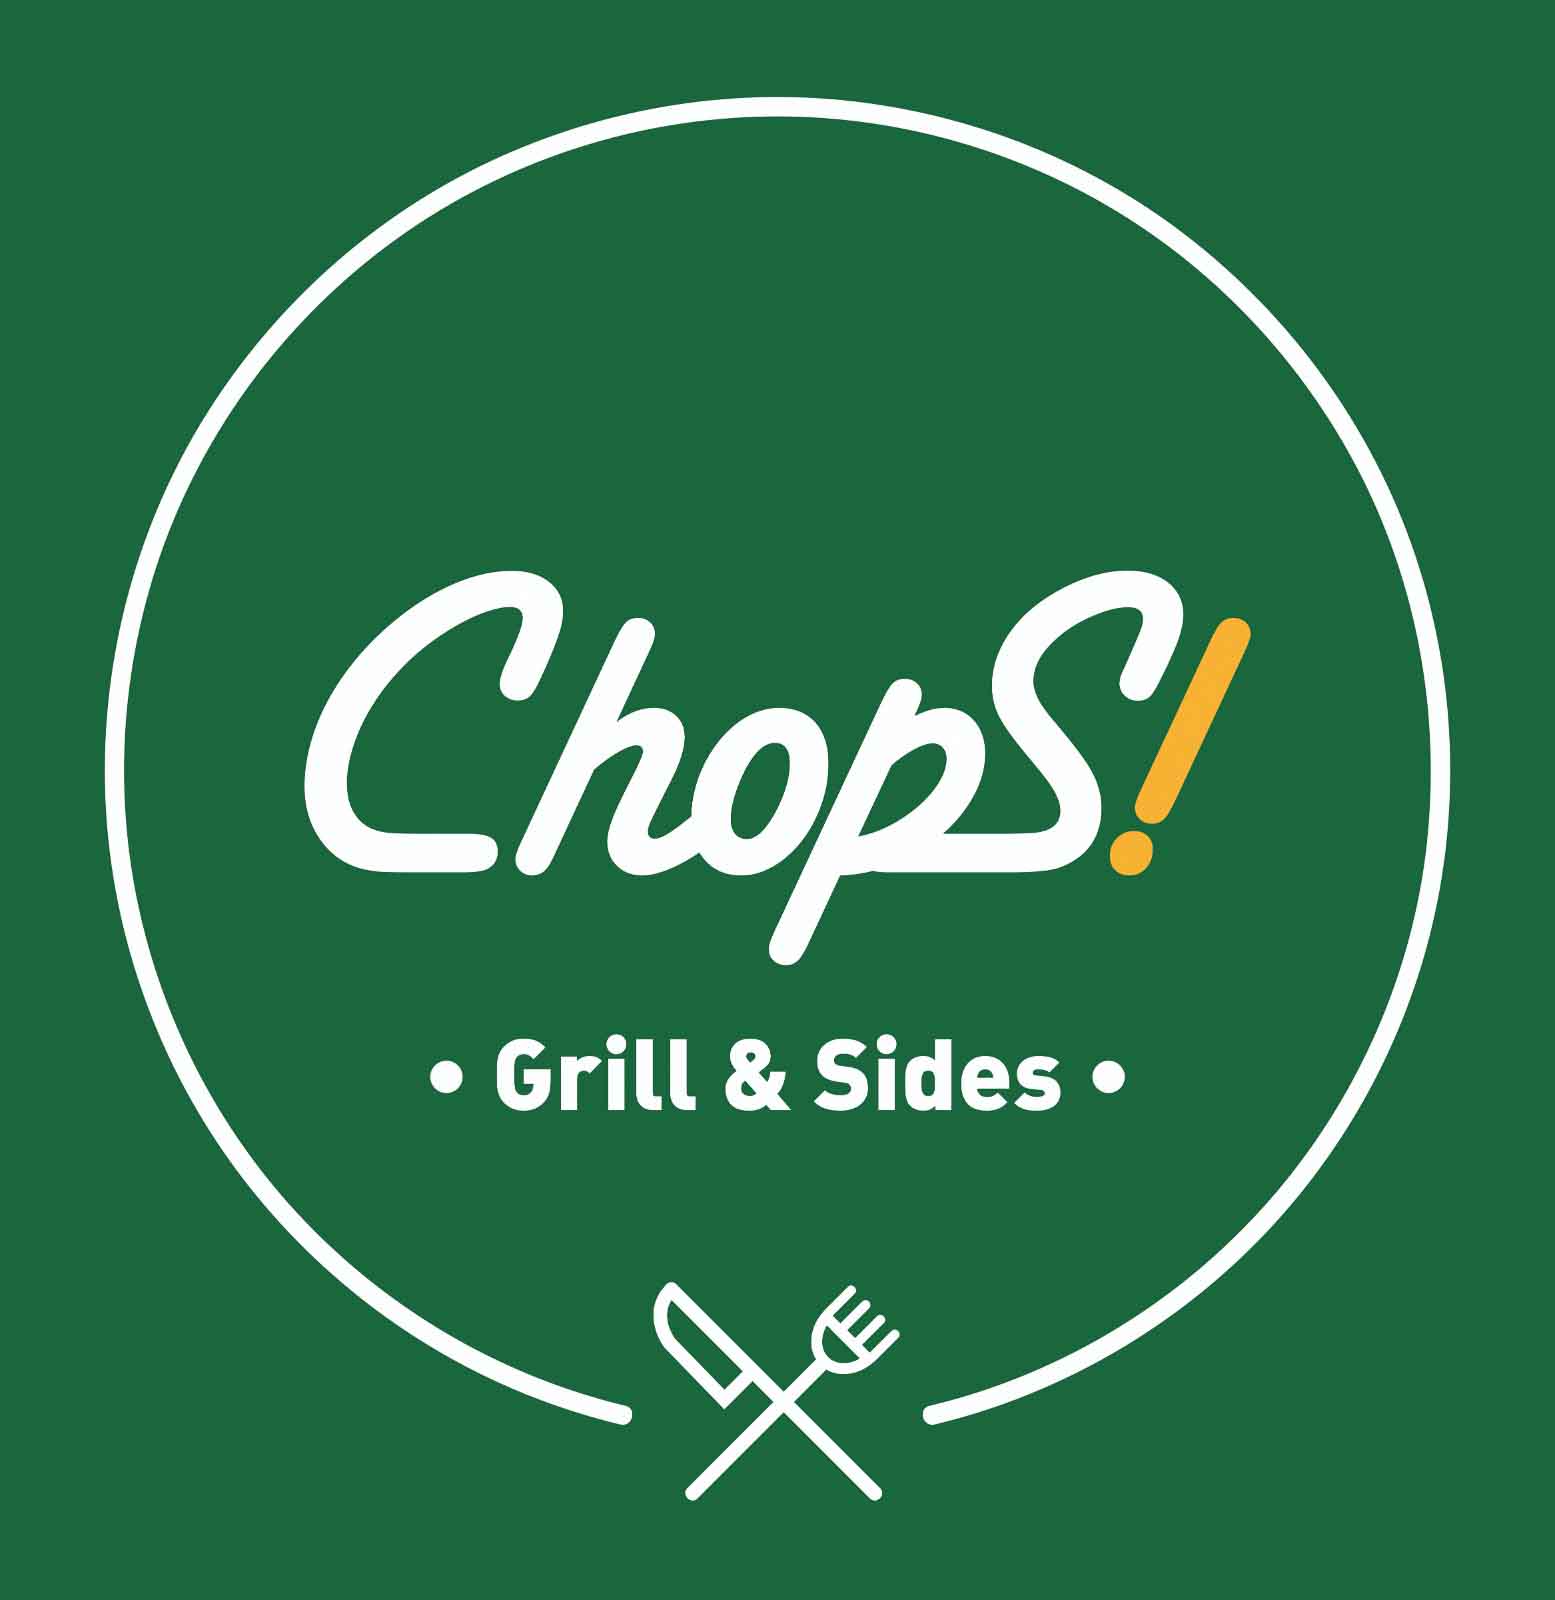 Chops Holdings Pte. Ltd. company logo